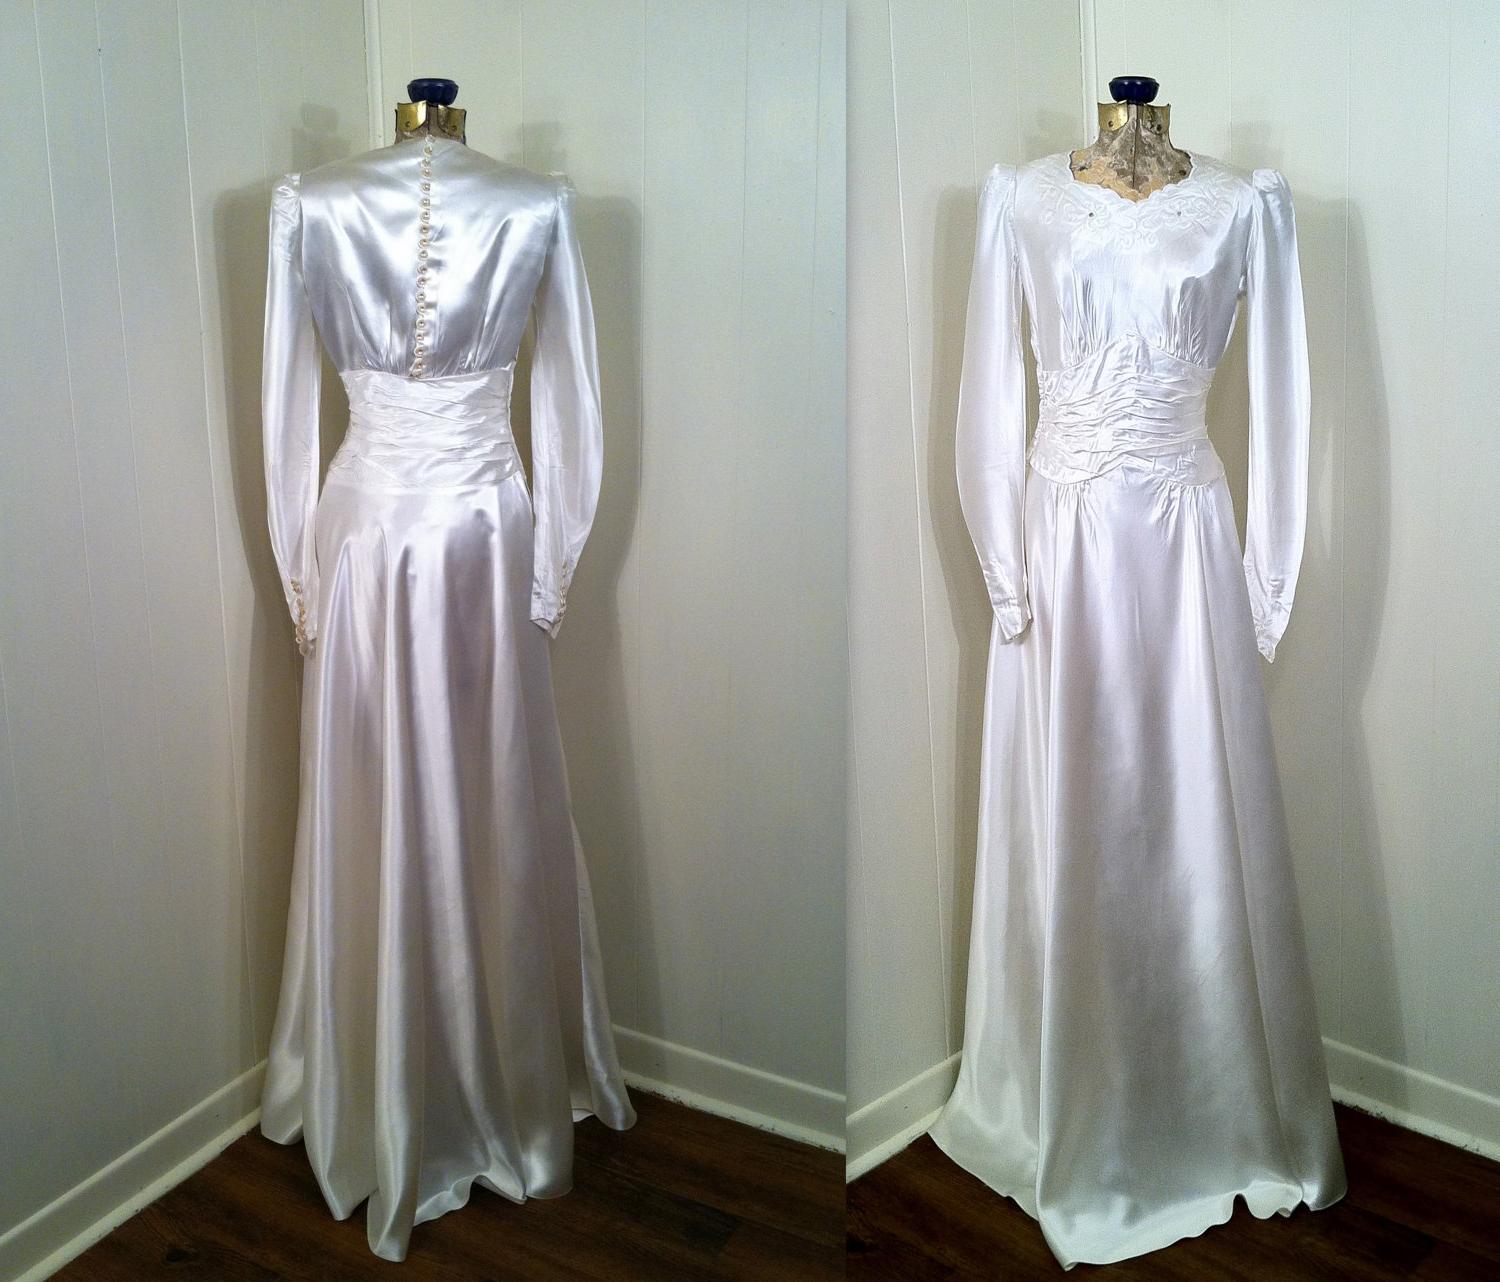 Vintage 1940s White Liquid Satin Wedding Gown. From SLVintage